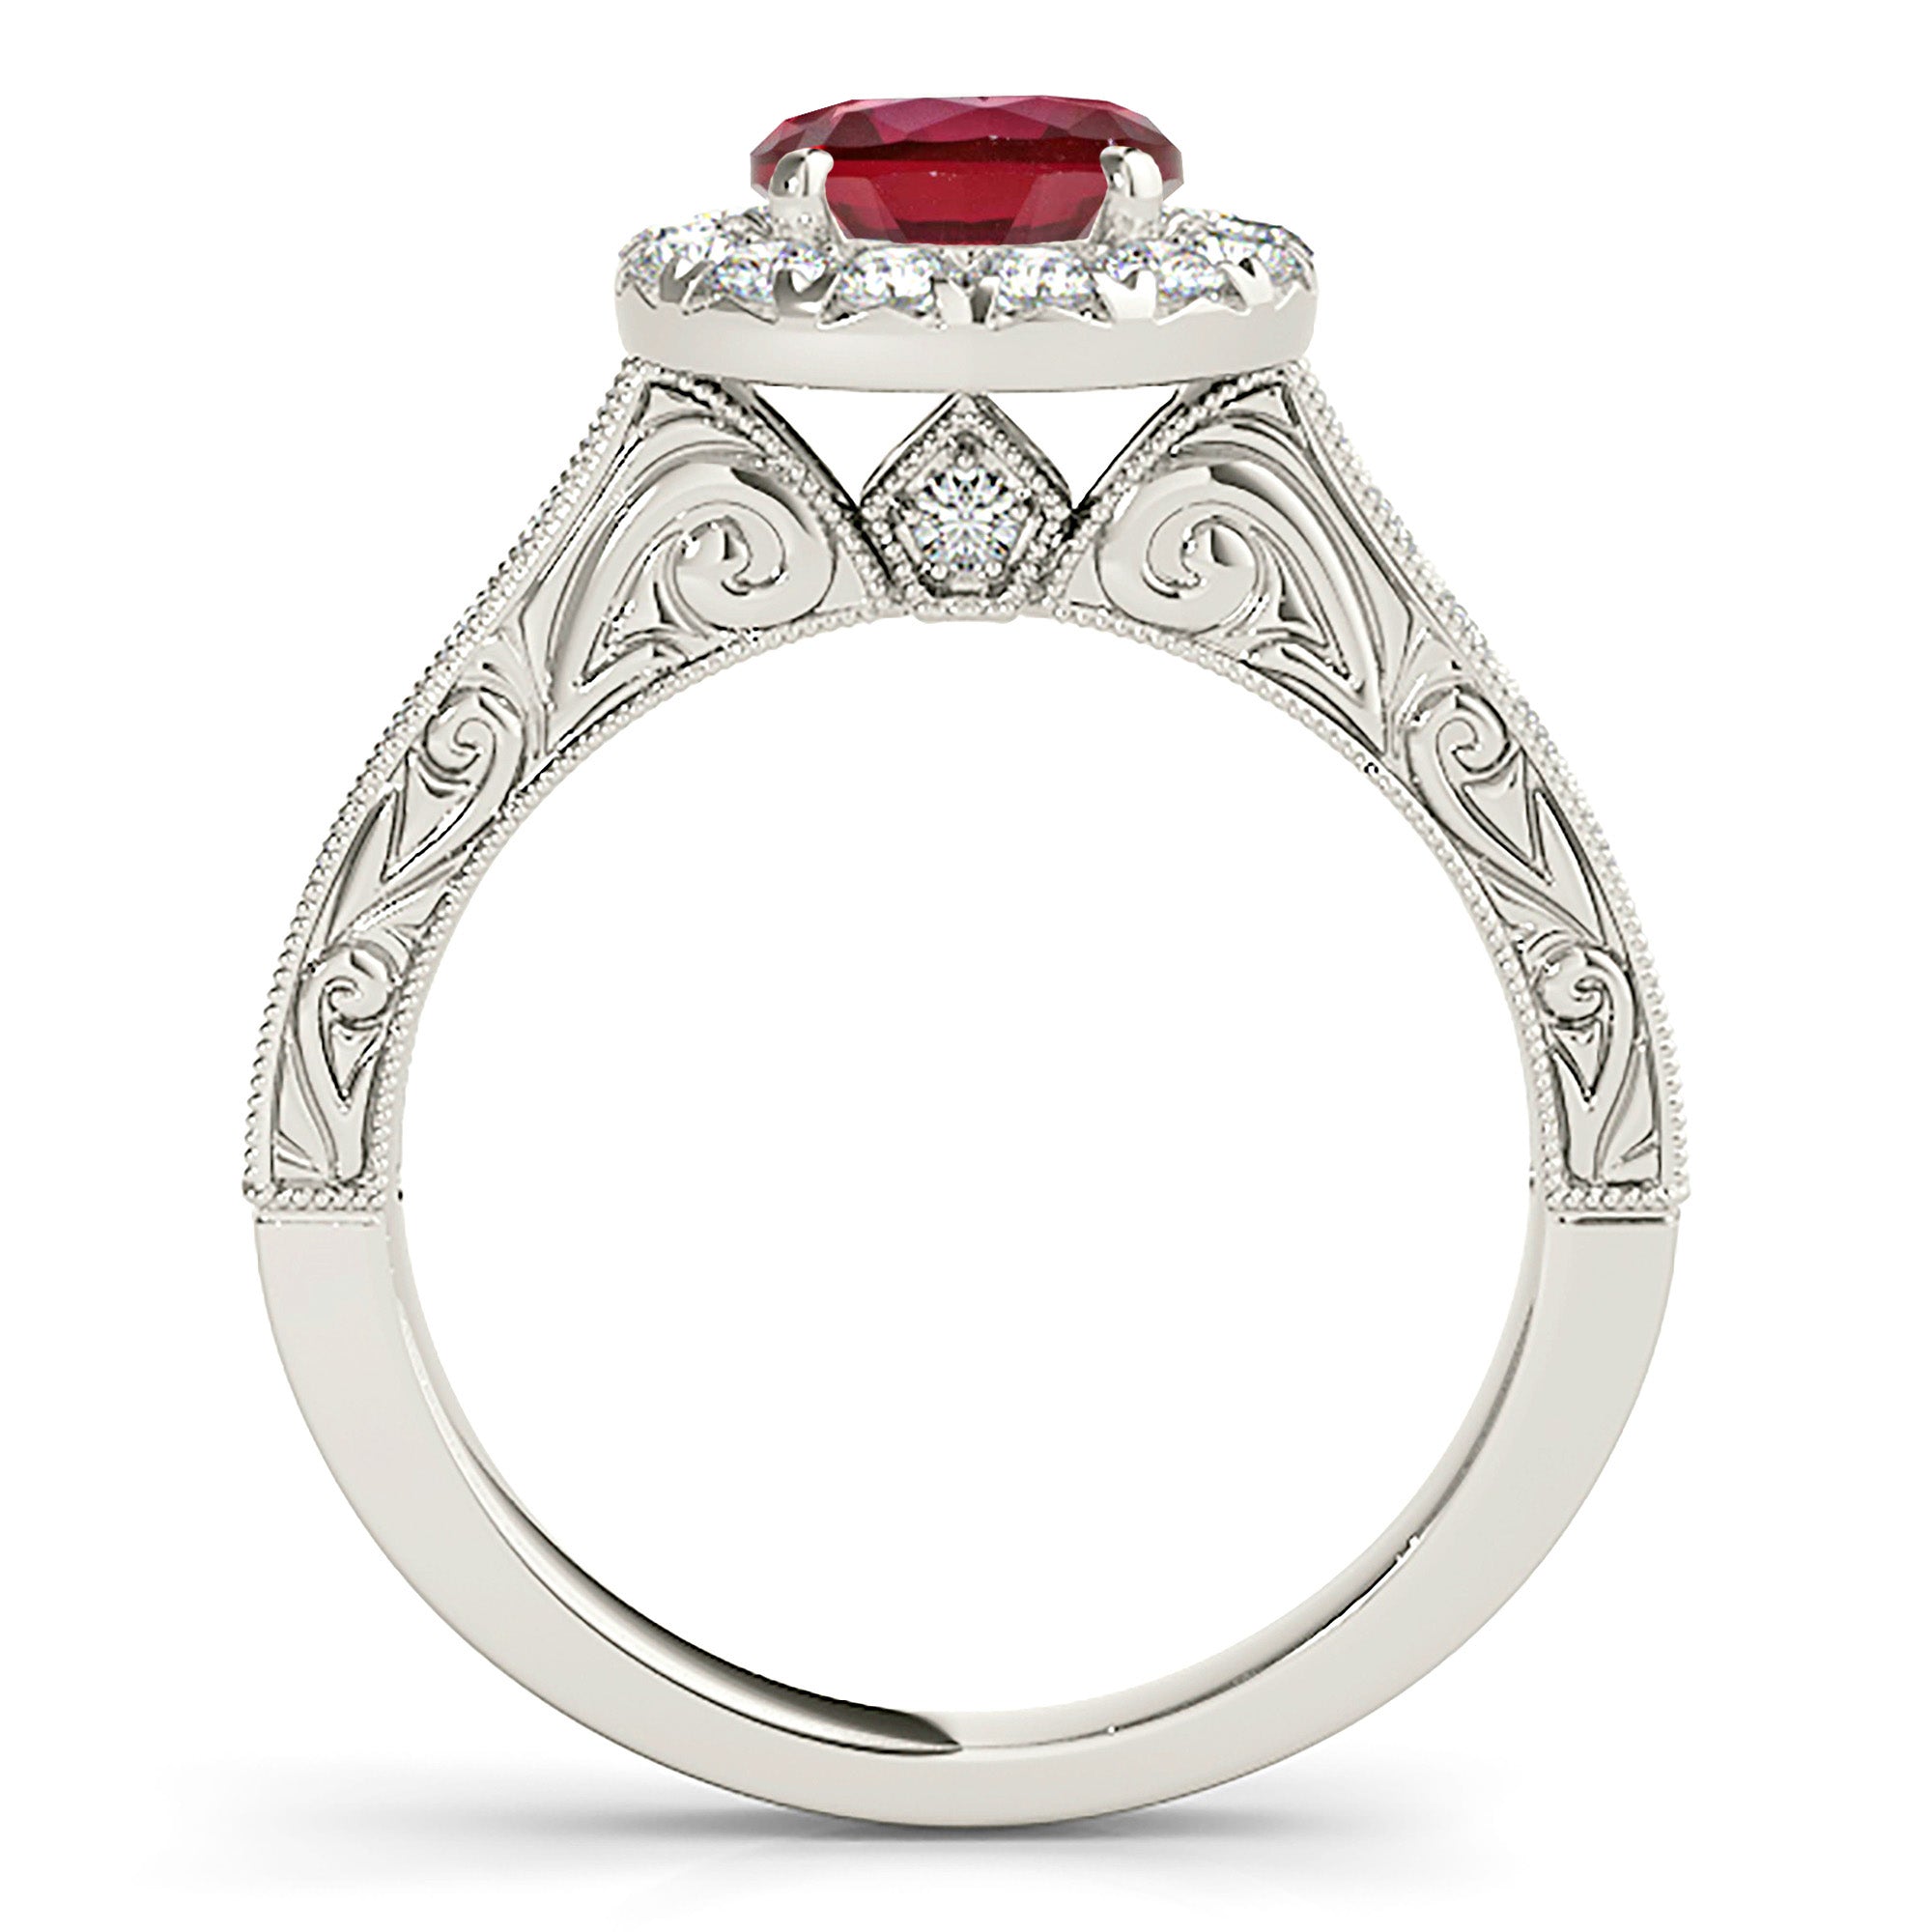 1.35 ct. Genuine Ruby Ring With 0.70 ctw. Diamond Halo And Milgrain Diamond Band, Filligree Design-in 14K/18K White, Yellow, Rose Gold and Platinum - Christmas Jewelry Gift -VIRABYANI